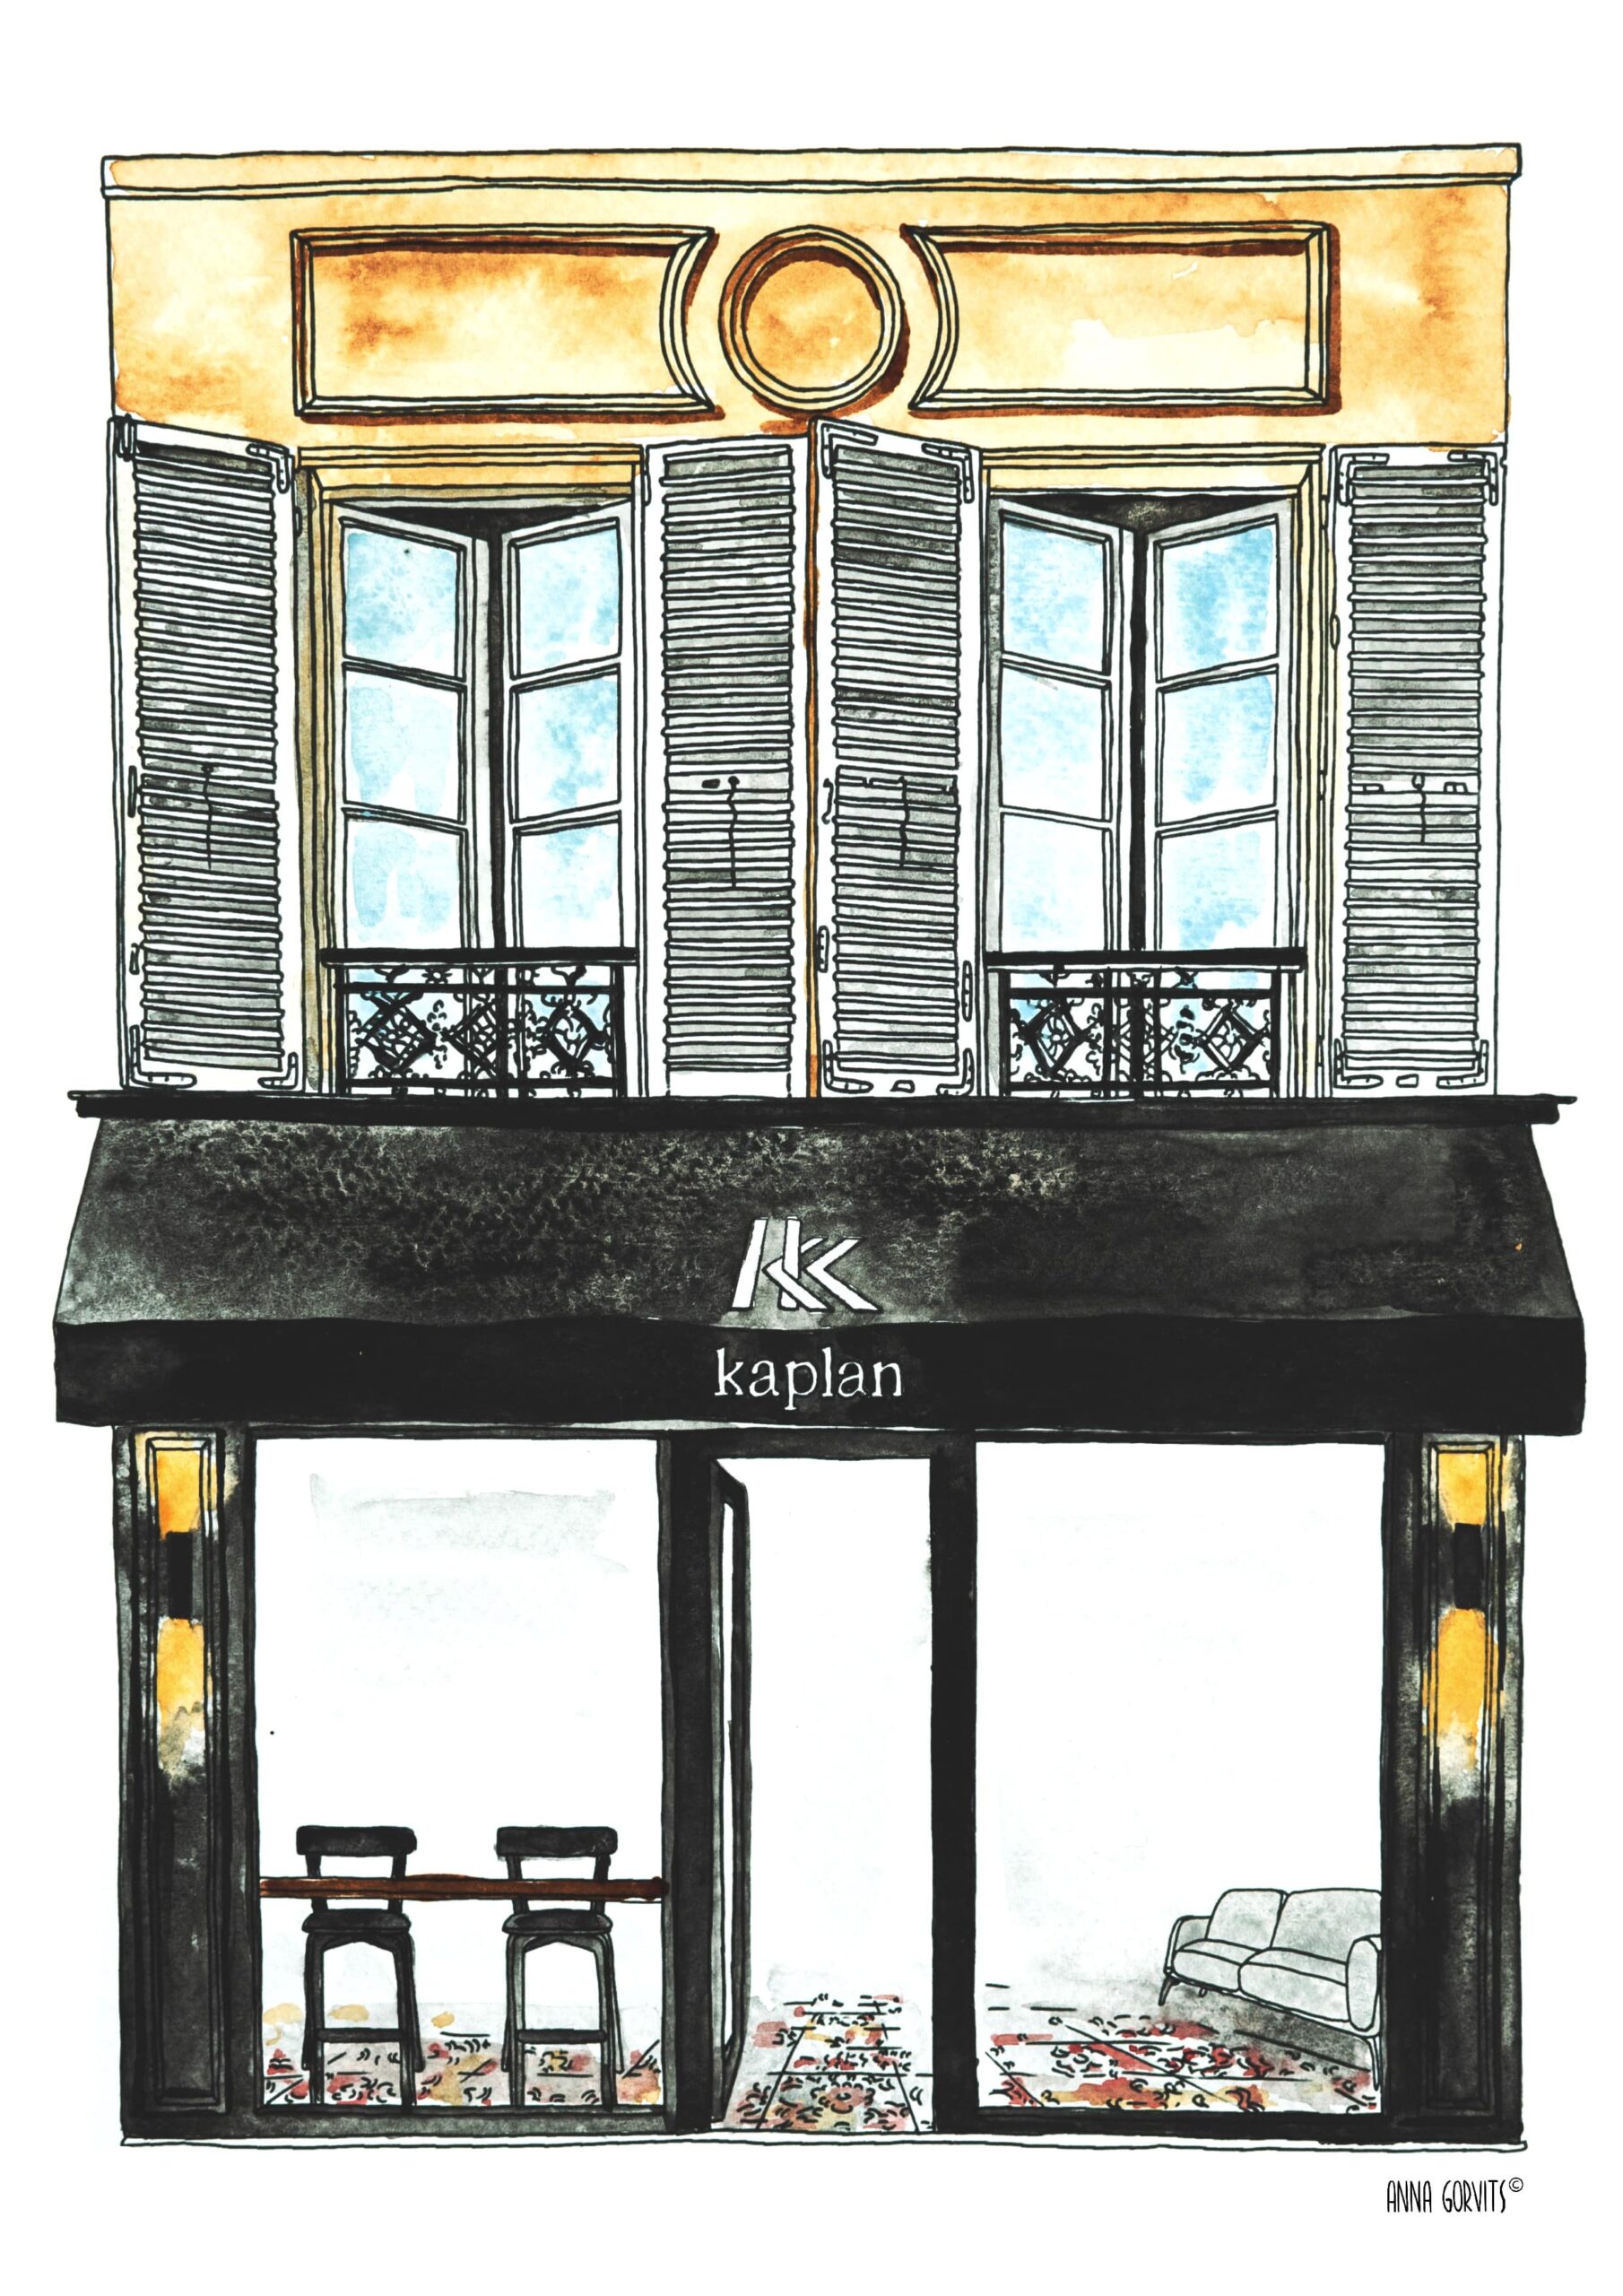 Kaplan Paris by Anna Gorvits